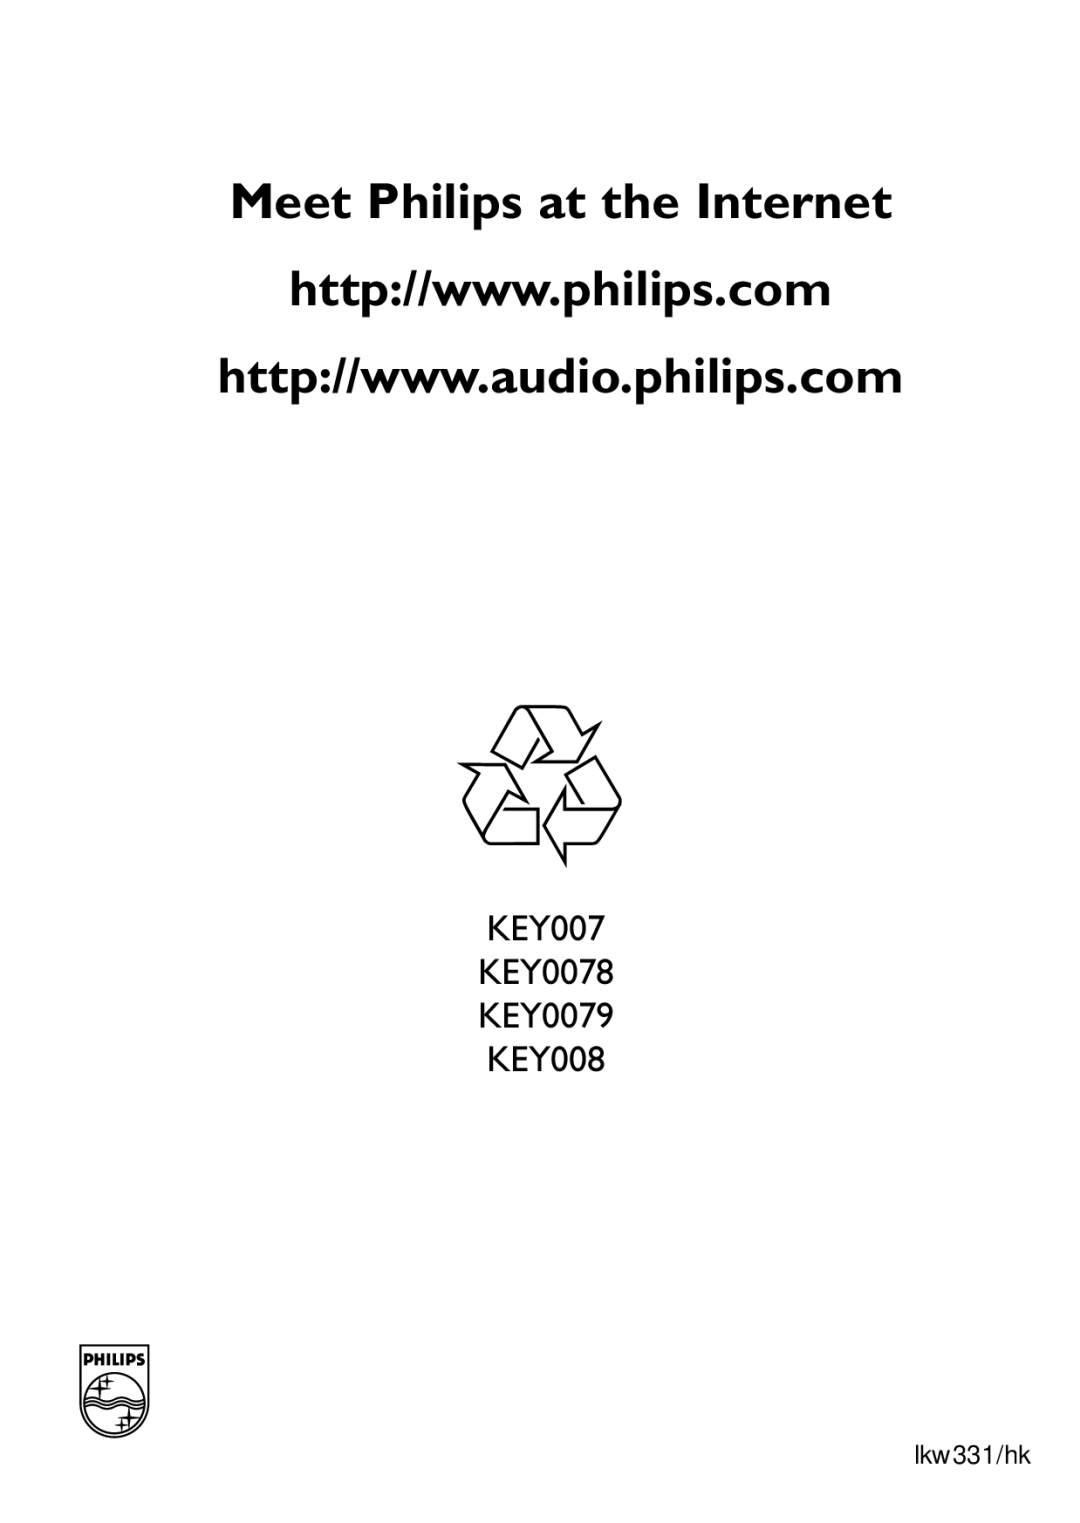 Philips user manual Meet Philips at the Internet, KEY007 KEY0078 KEY0079 KEY008 